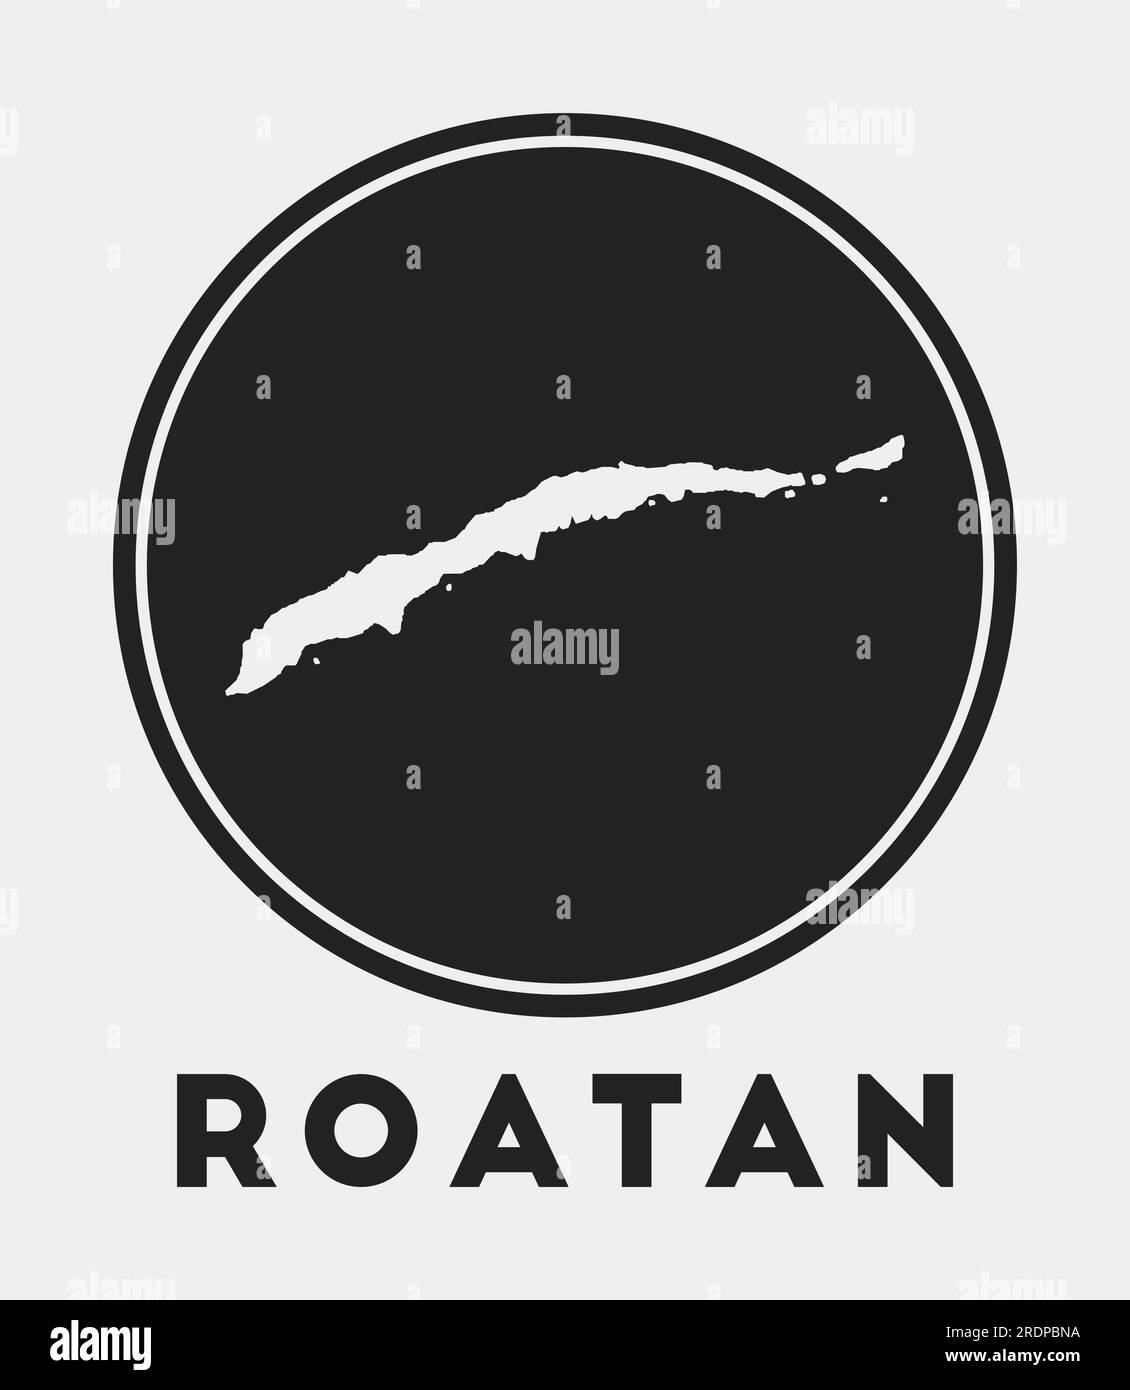 Roatan icon. Round logo with island map and title. Stylish Roatan badge ...